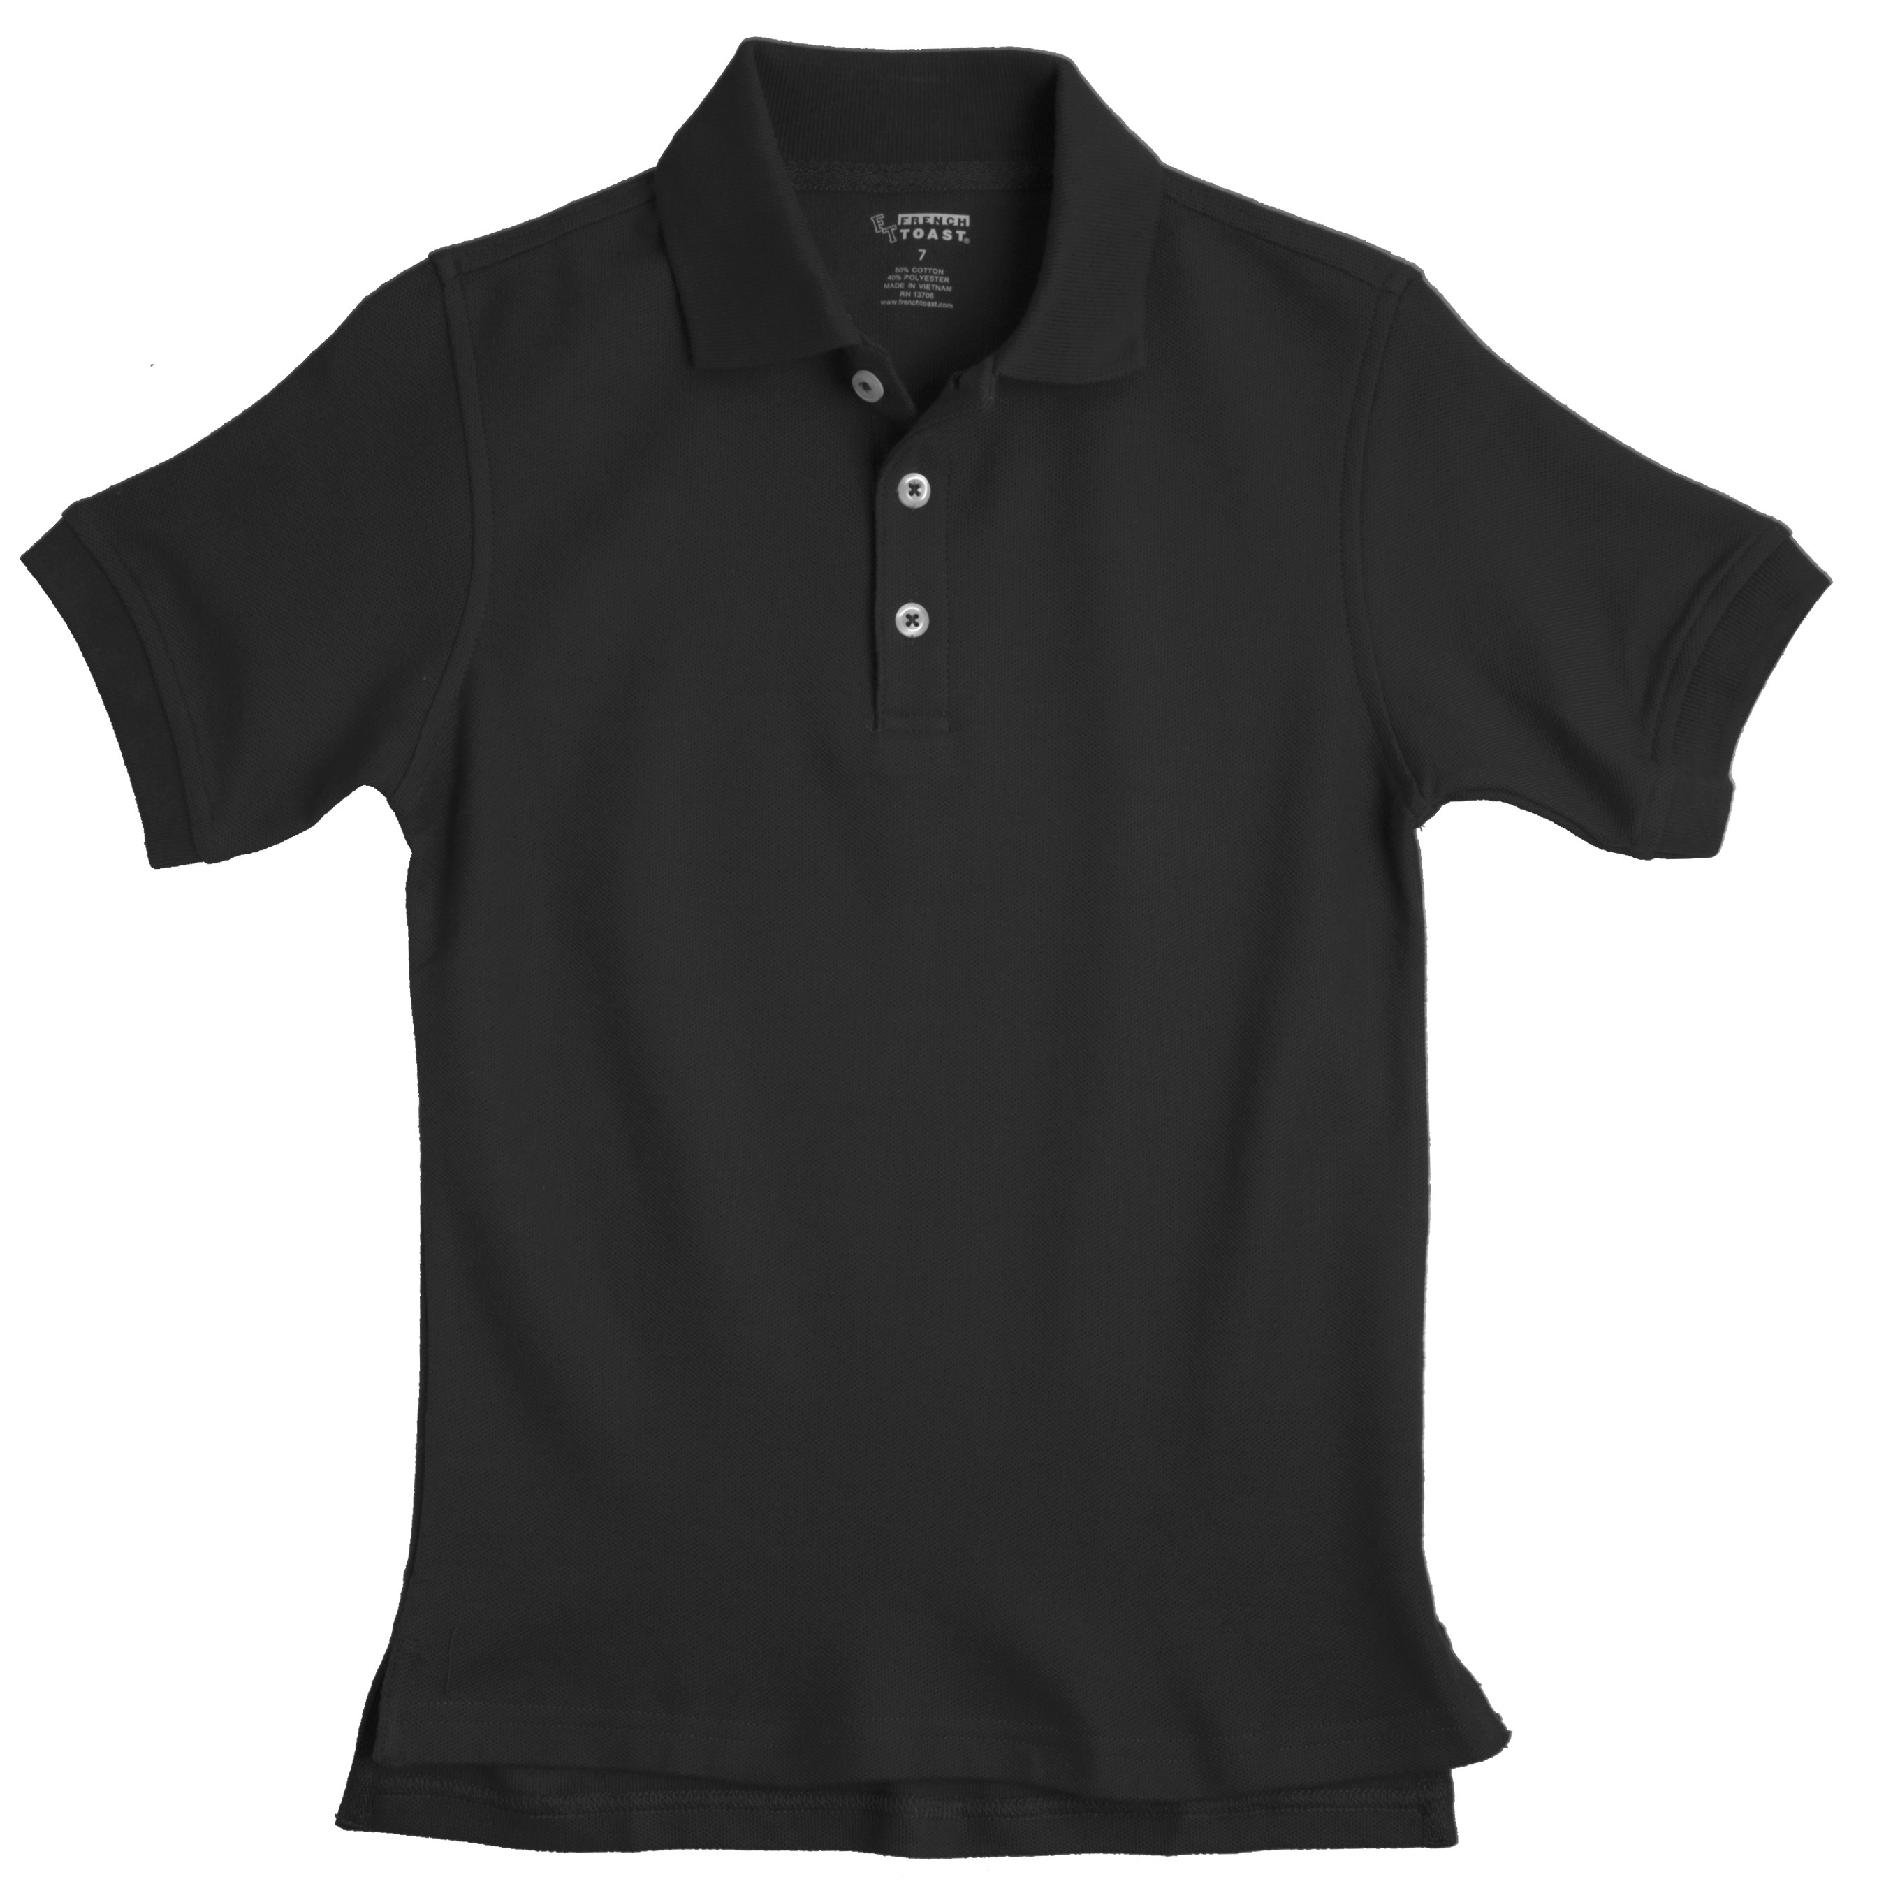 Unisex Teen Short Sleeve Pique Polo Shirt